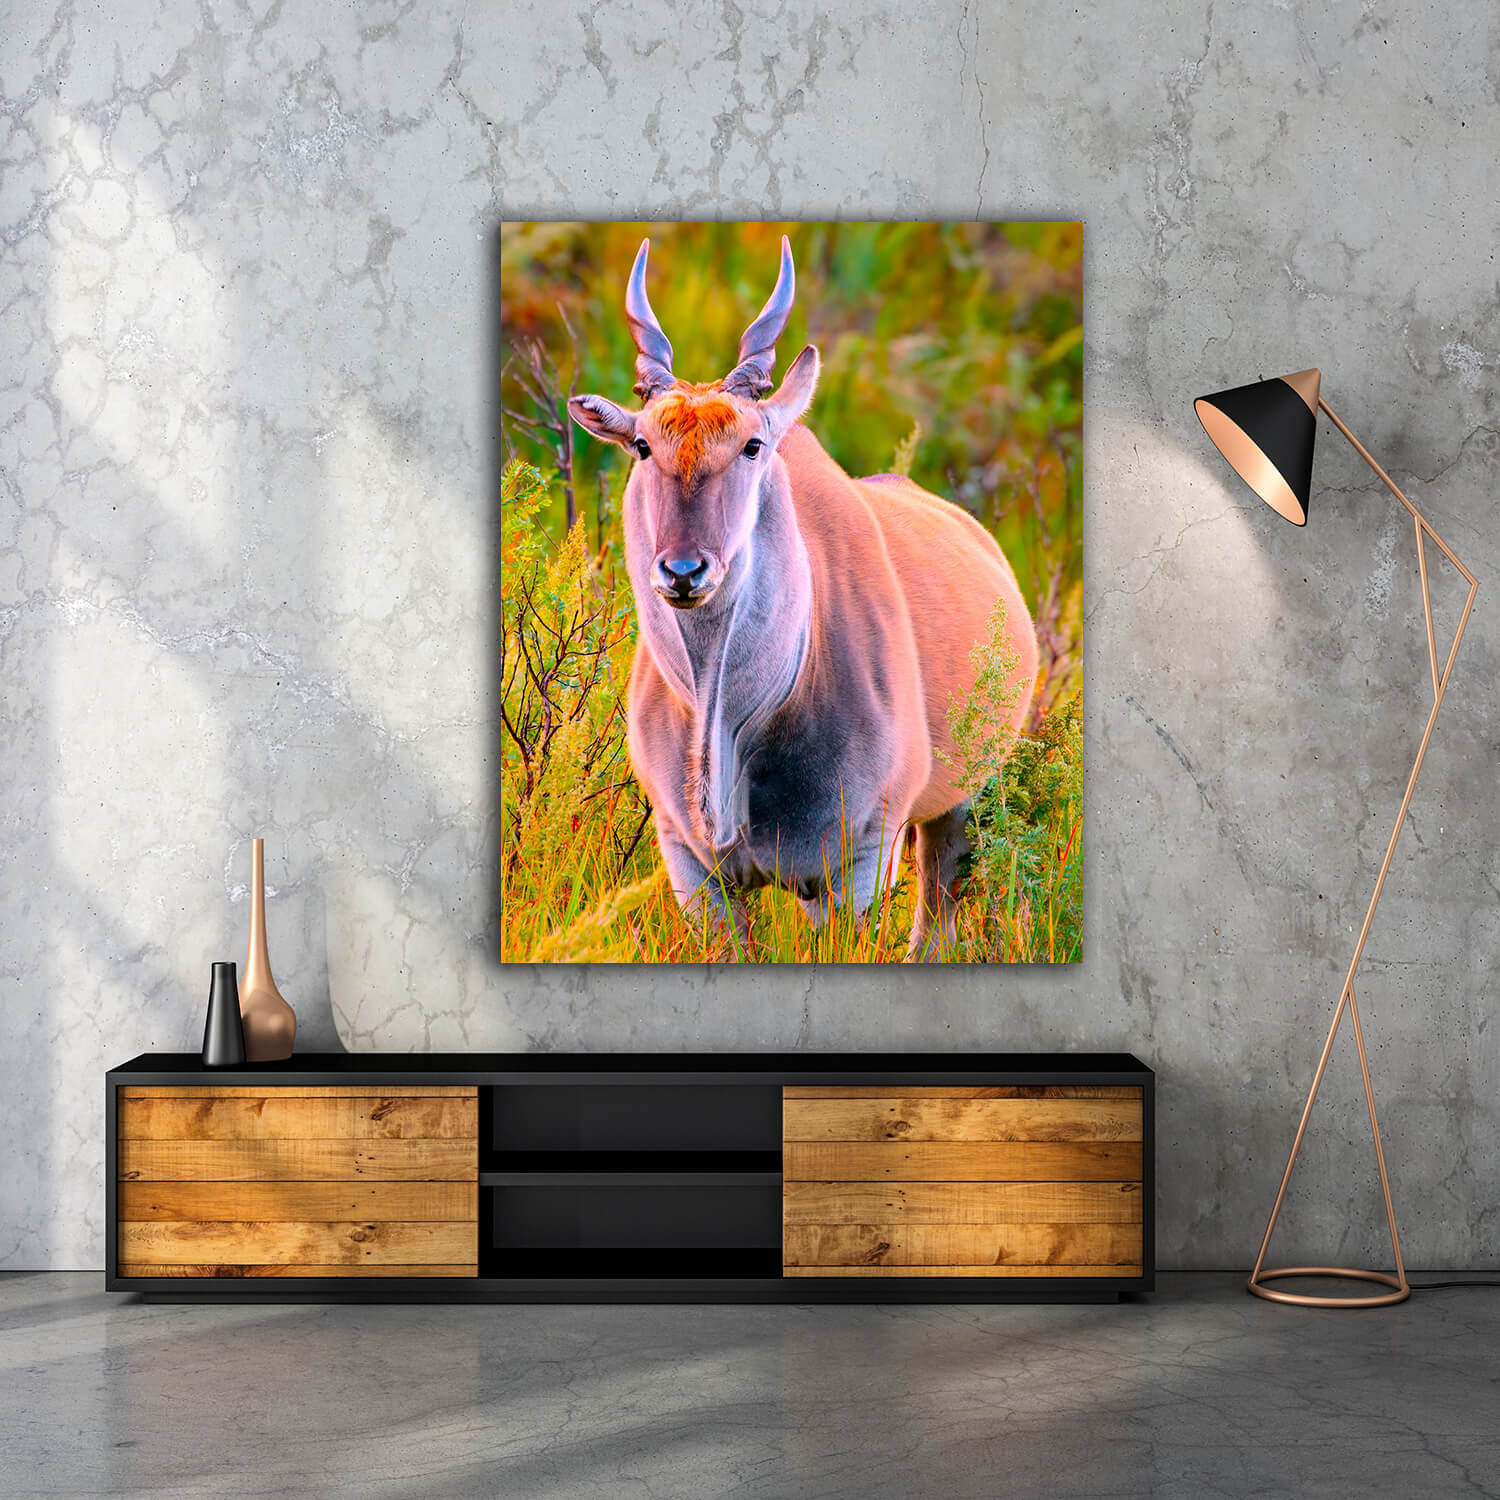 WEB005_0021_MP_0008_45212612_eland-antelope-in-natural-habitat – AOAY4756